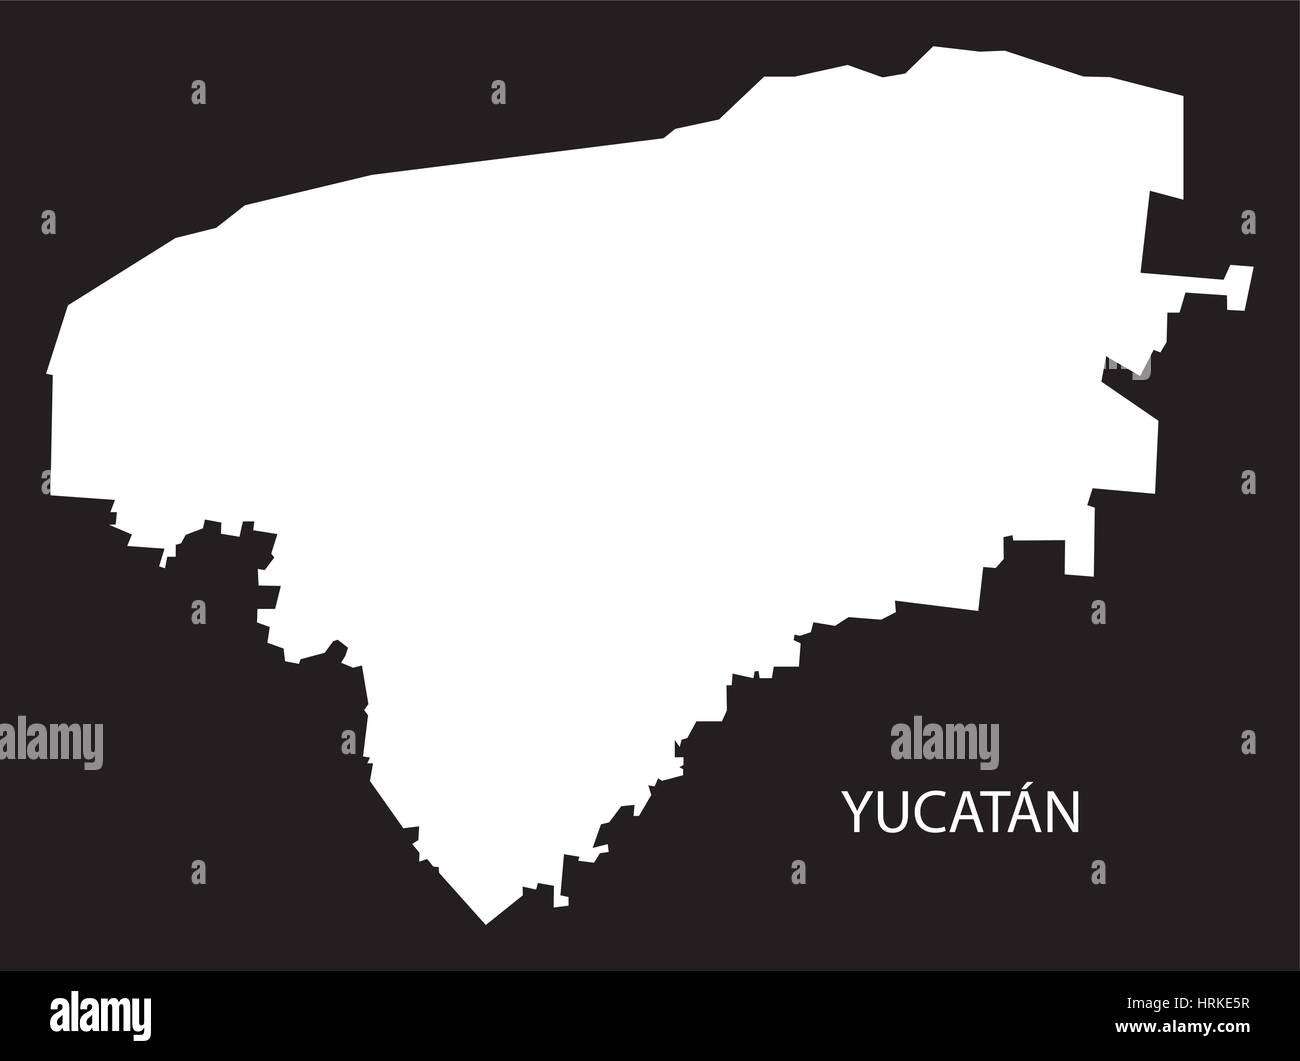 Yucatan Mexiko Karte schwarz invertiert silhouette Stock Vektor